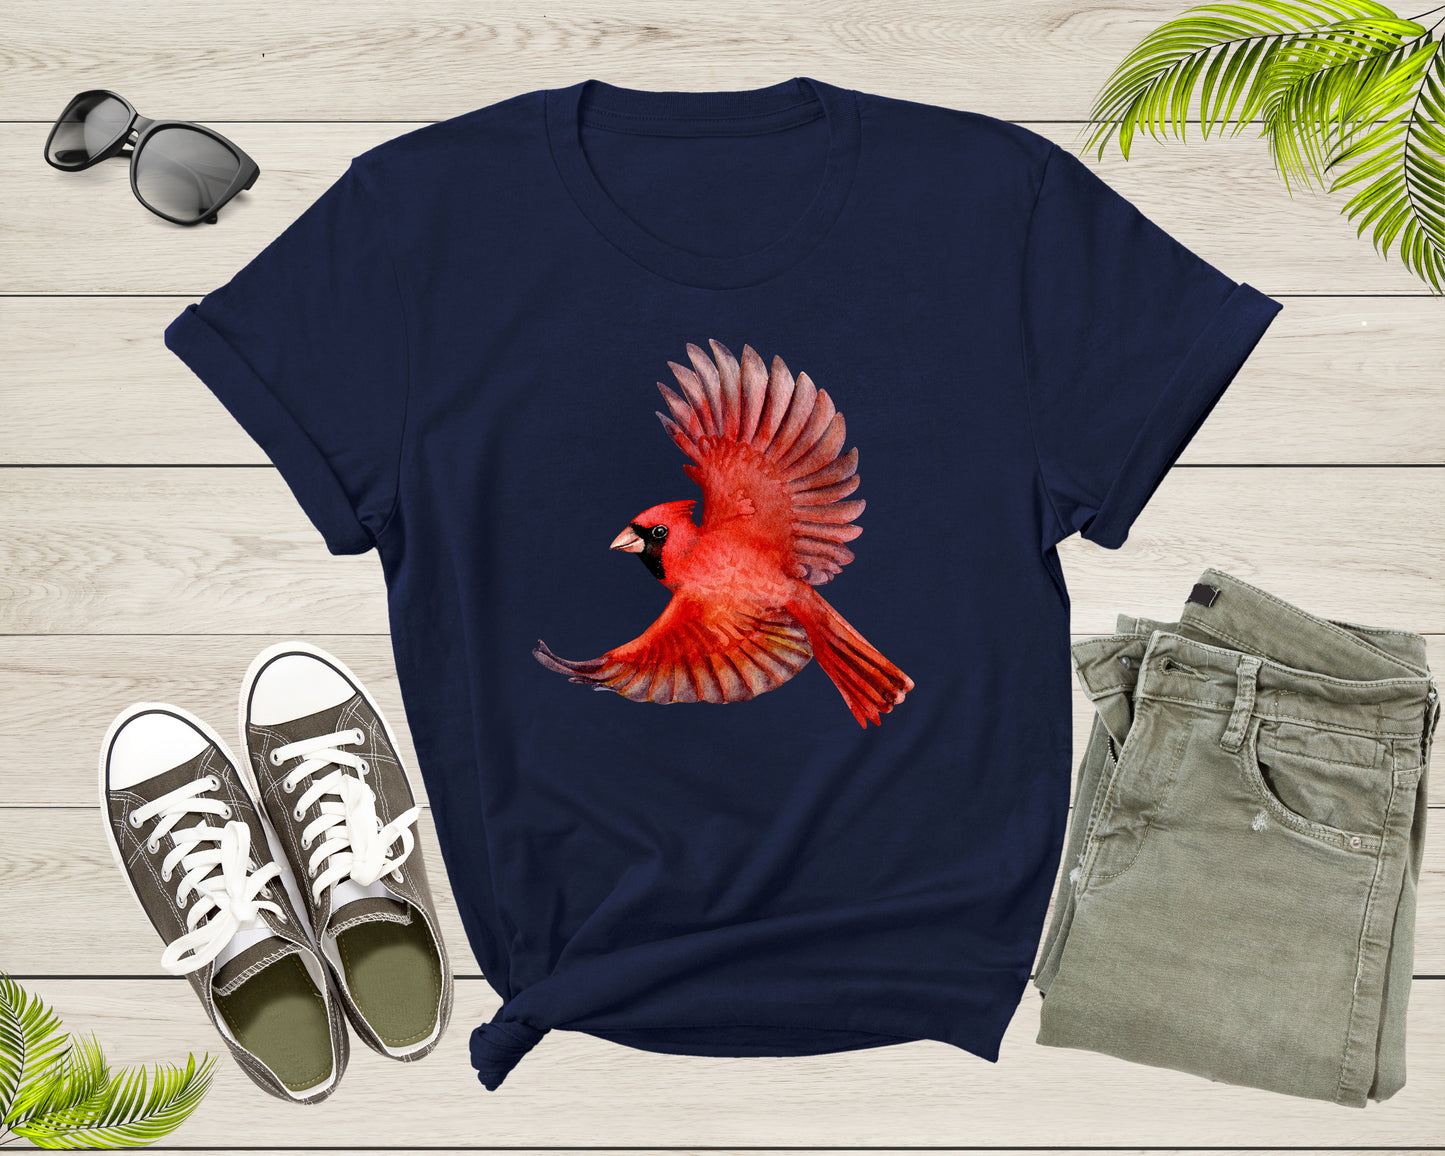 Cute Flying Northern Red Cardinal Bird Redbird Wings T-Shirt Cardinal Bird Lover Gift T Shirt for Men Women Kids Boys Girls Graphic Tshirt